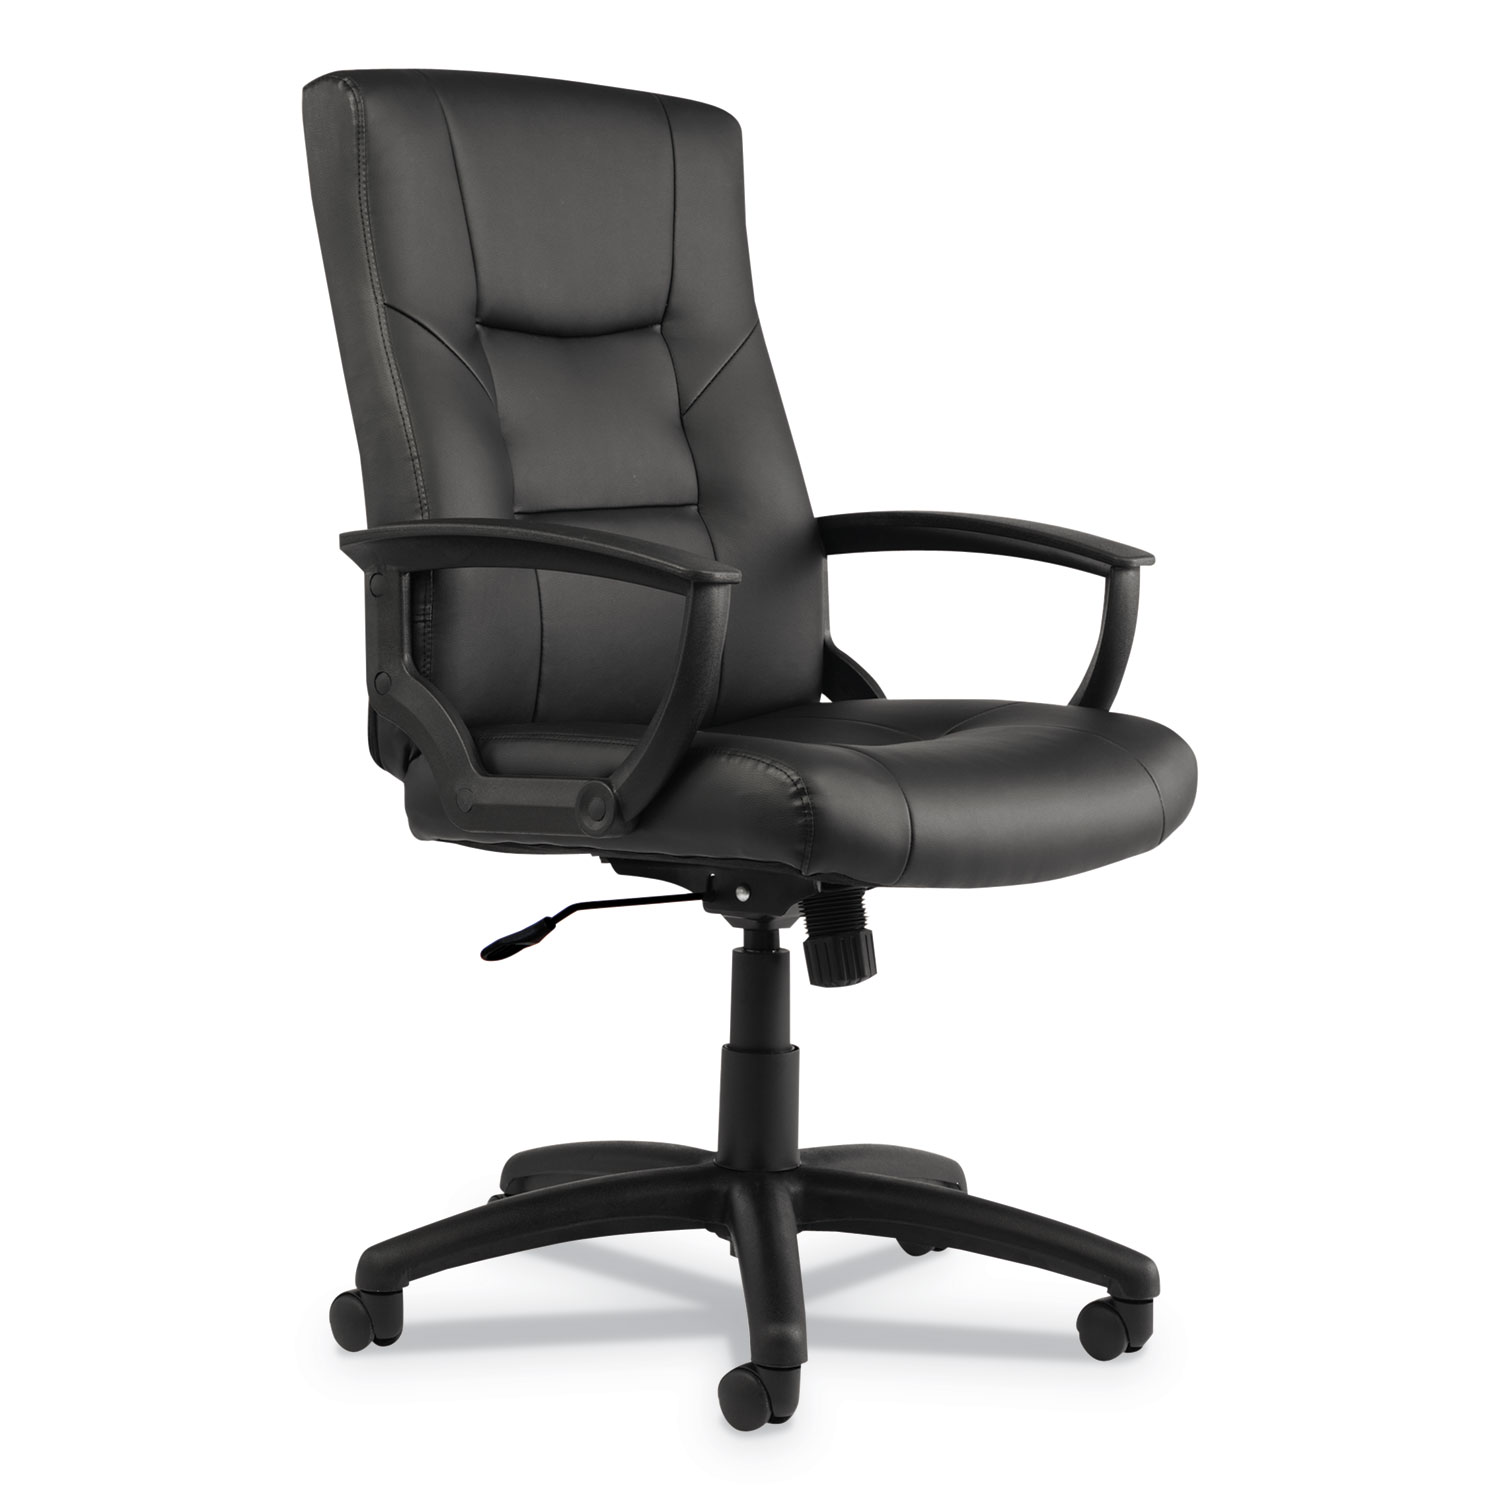  Alera ALEYR4119 Alera YR Series Executive High-Back Swivel/Tilt Leather Chair, Supports up to 275 lbs., Black Seat/Black Back, Black Base (ALEYR4119) 